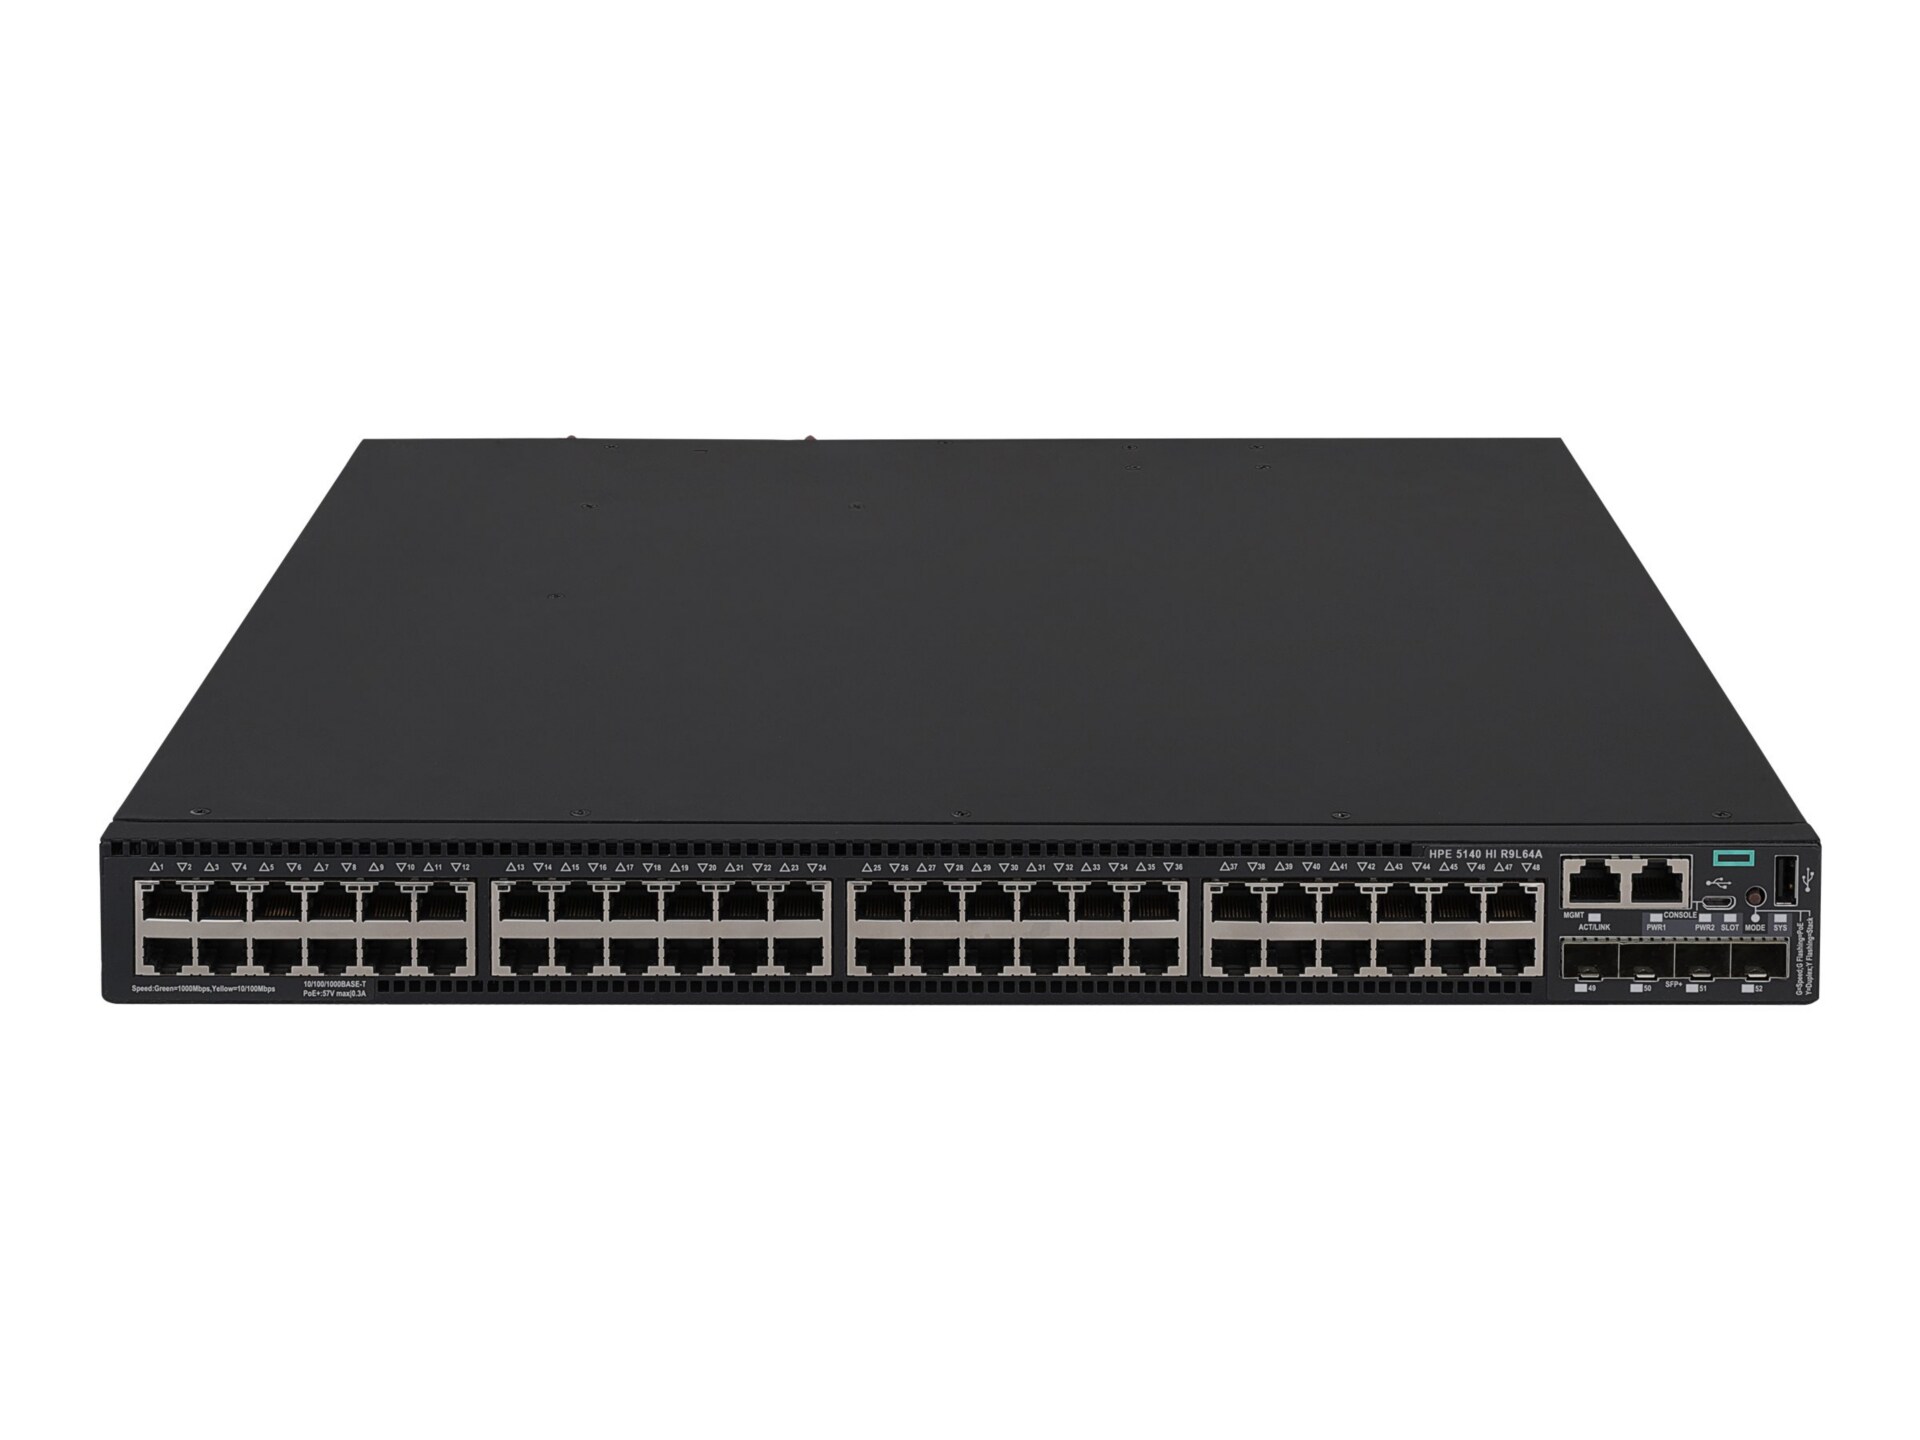 HPE FlexNetwork 5140 HI - switch - 1-slot - 48 ports - managed - rack-mount